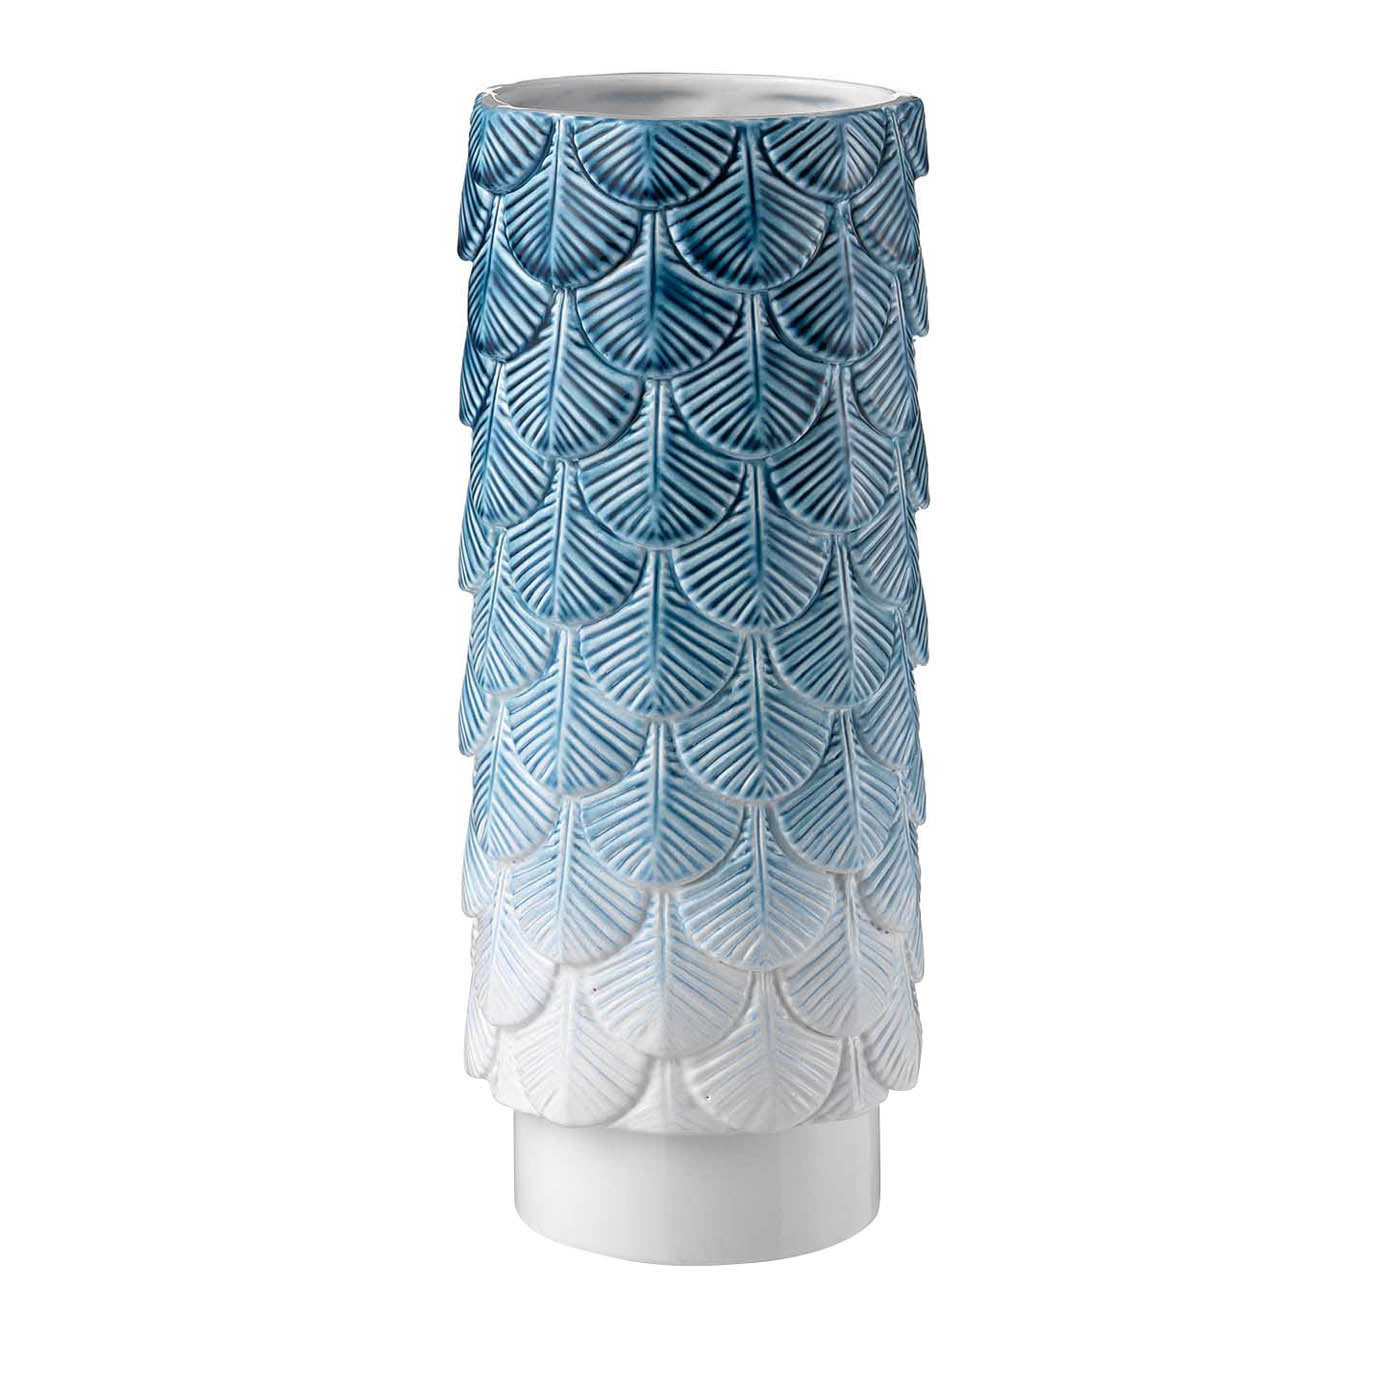 White and Blue Plumage Vase - Botteganove